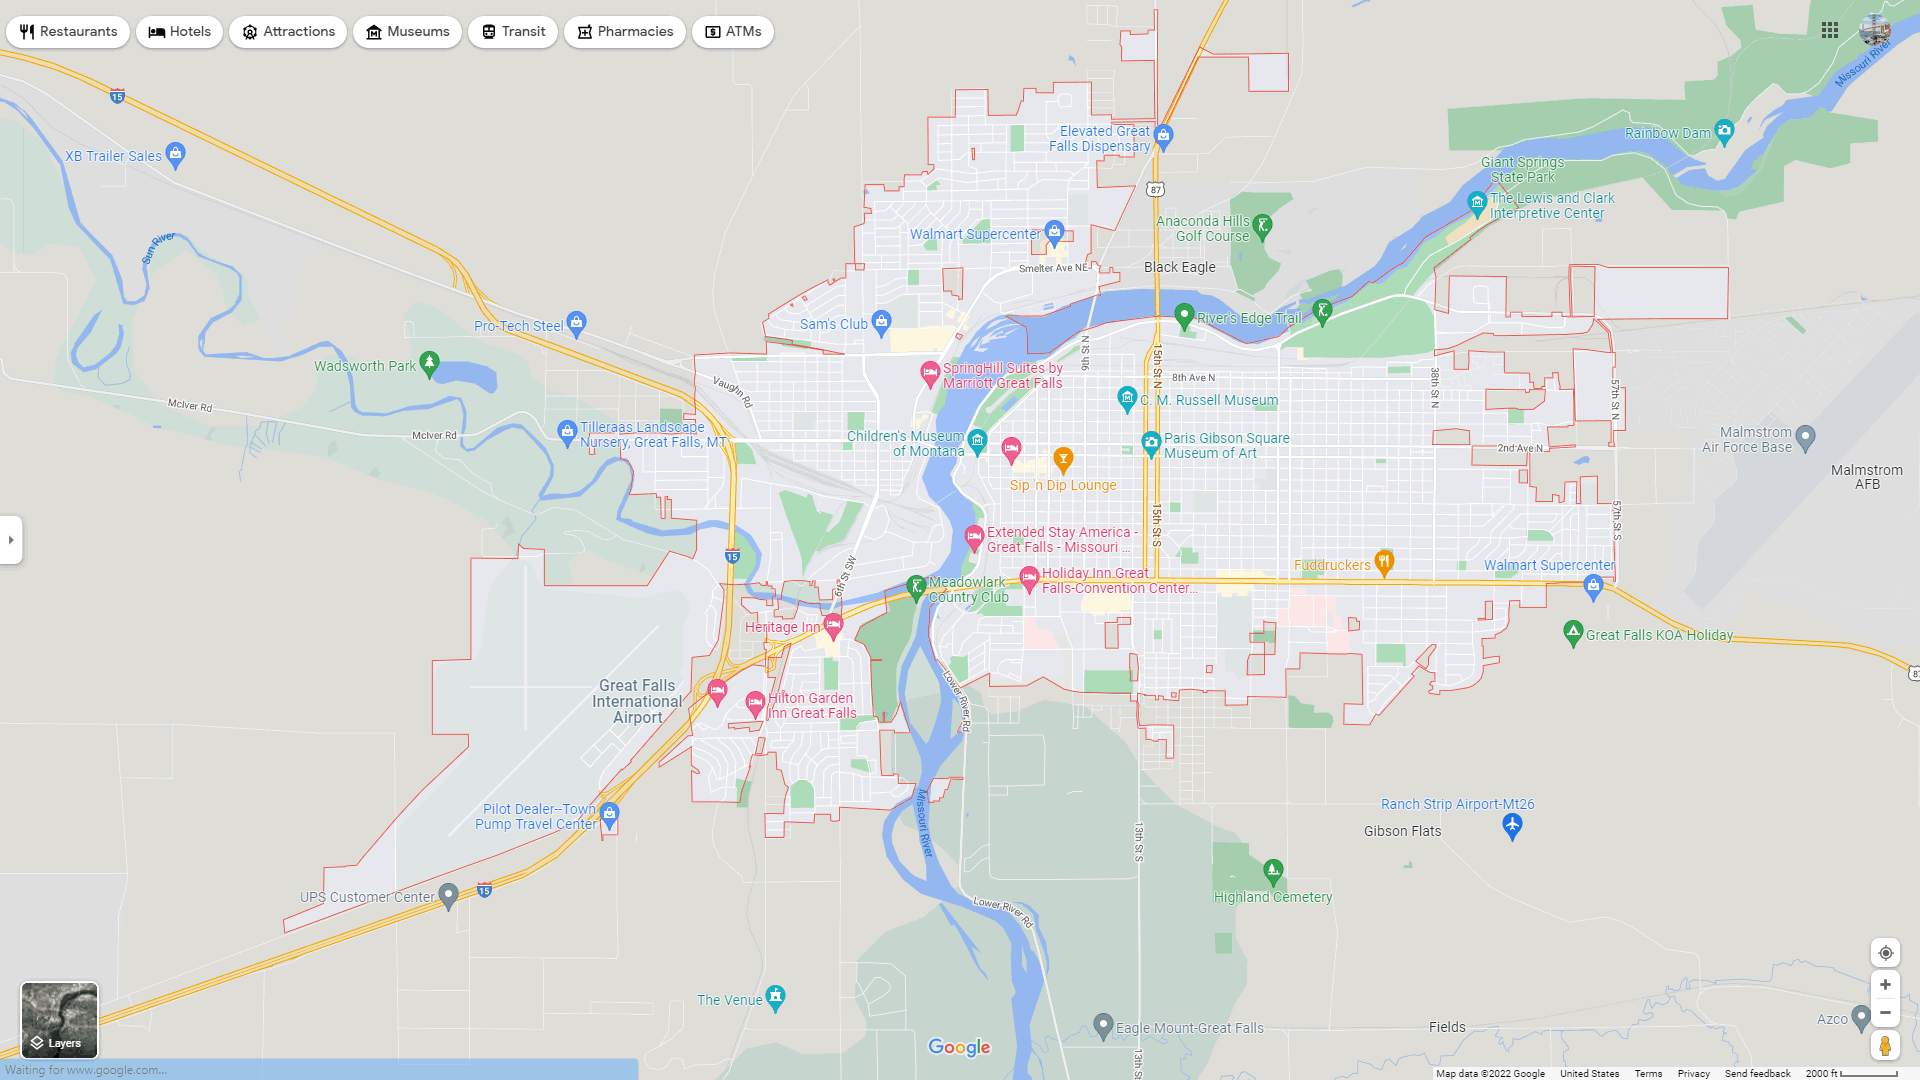 Great Falls map